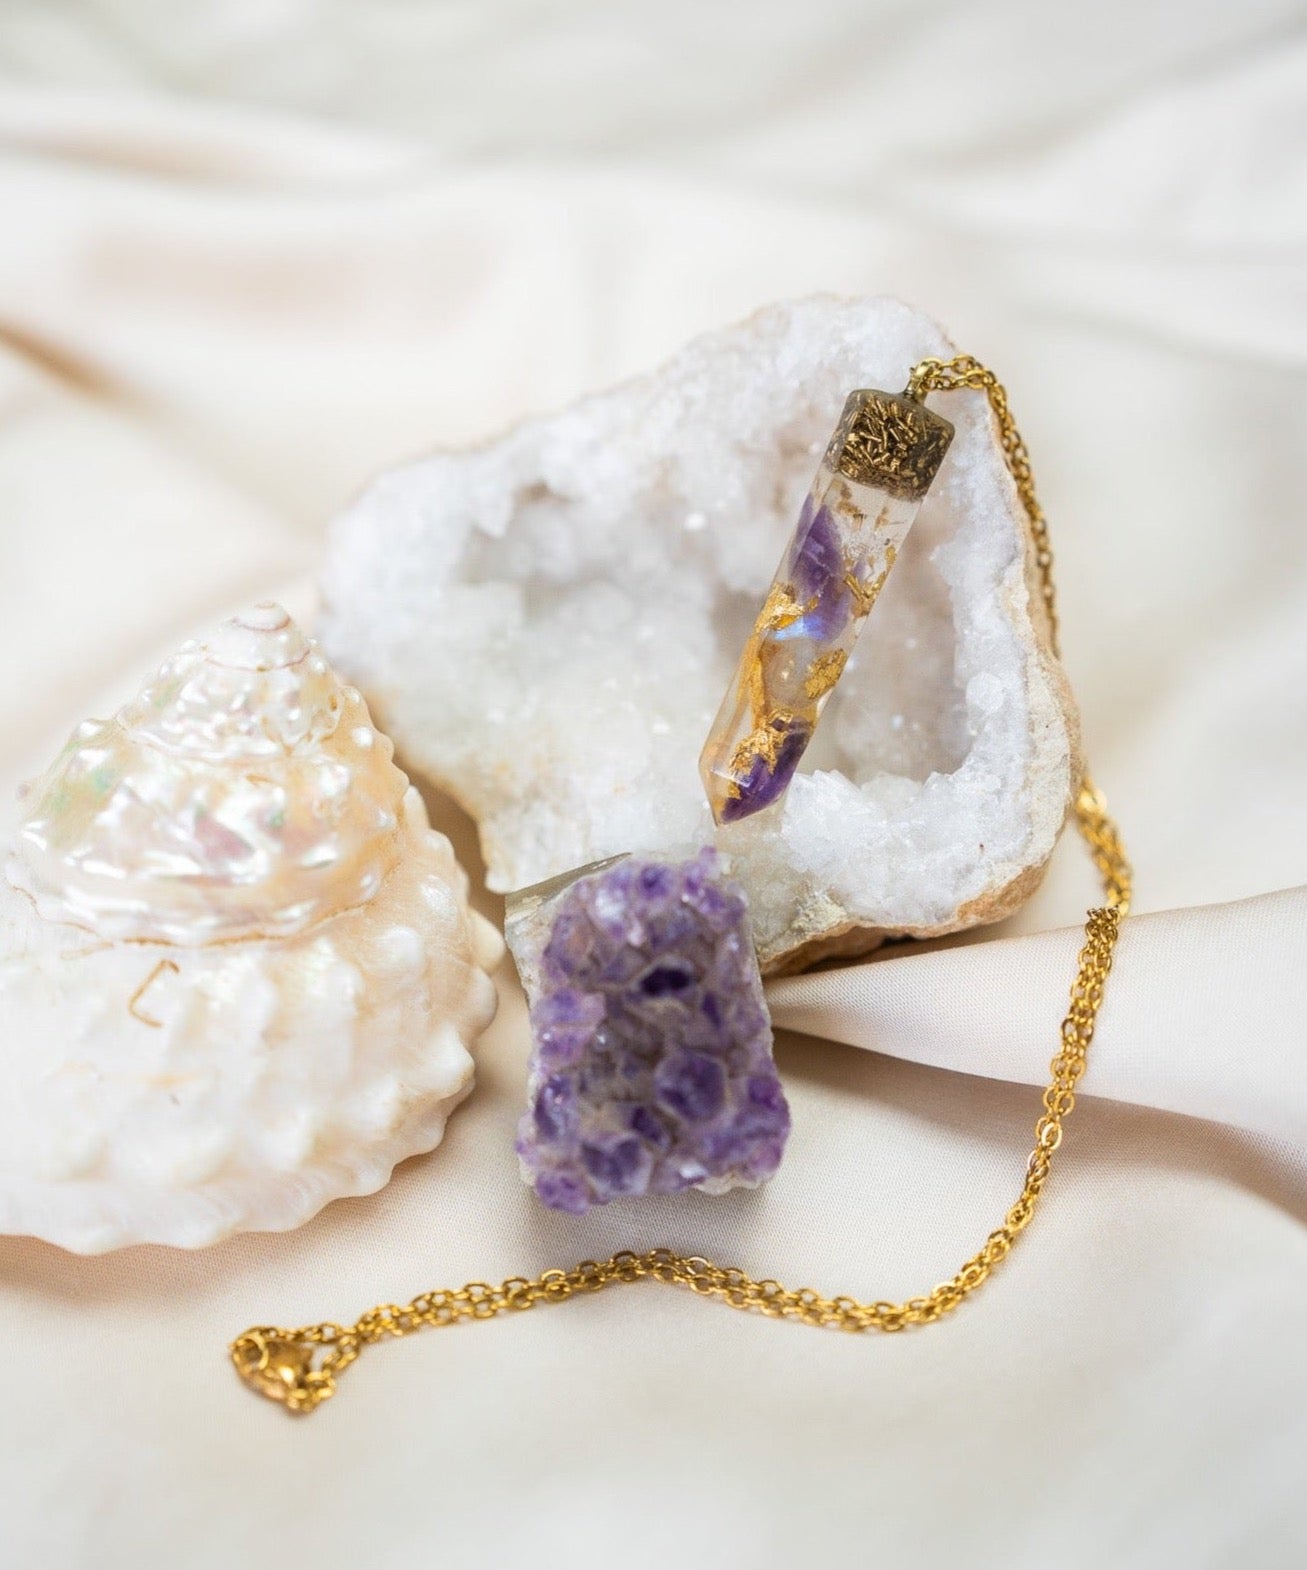 Golden Triangle Alchemy Crystal Healing Pendant For Love, Healing & Joy